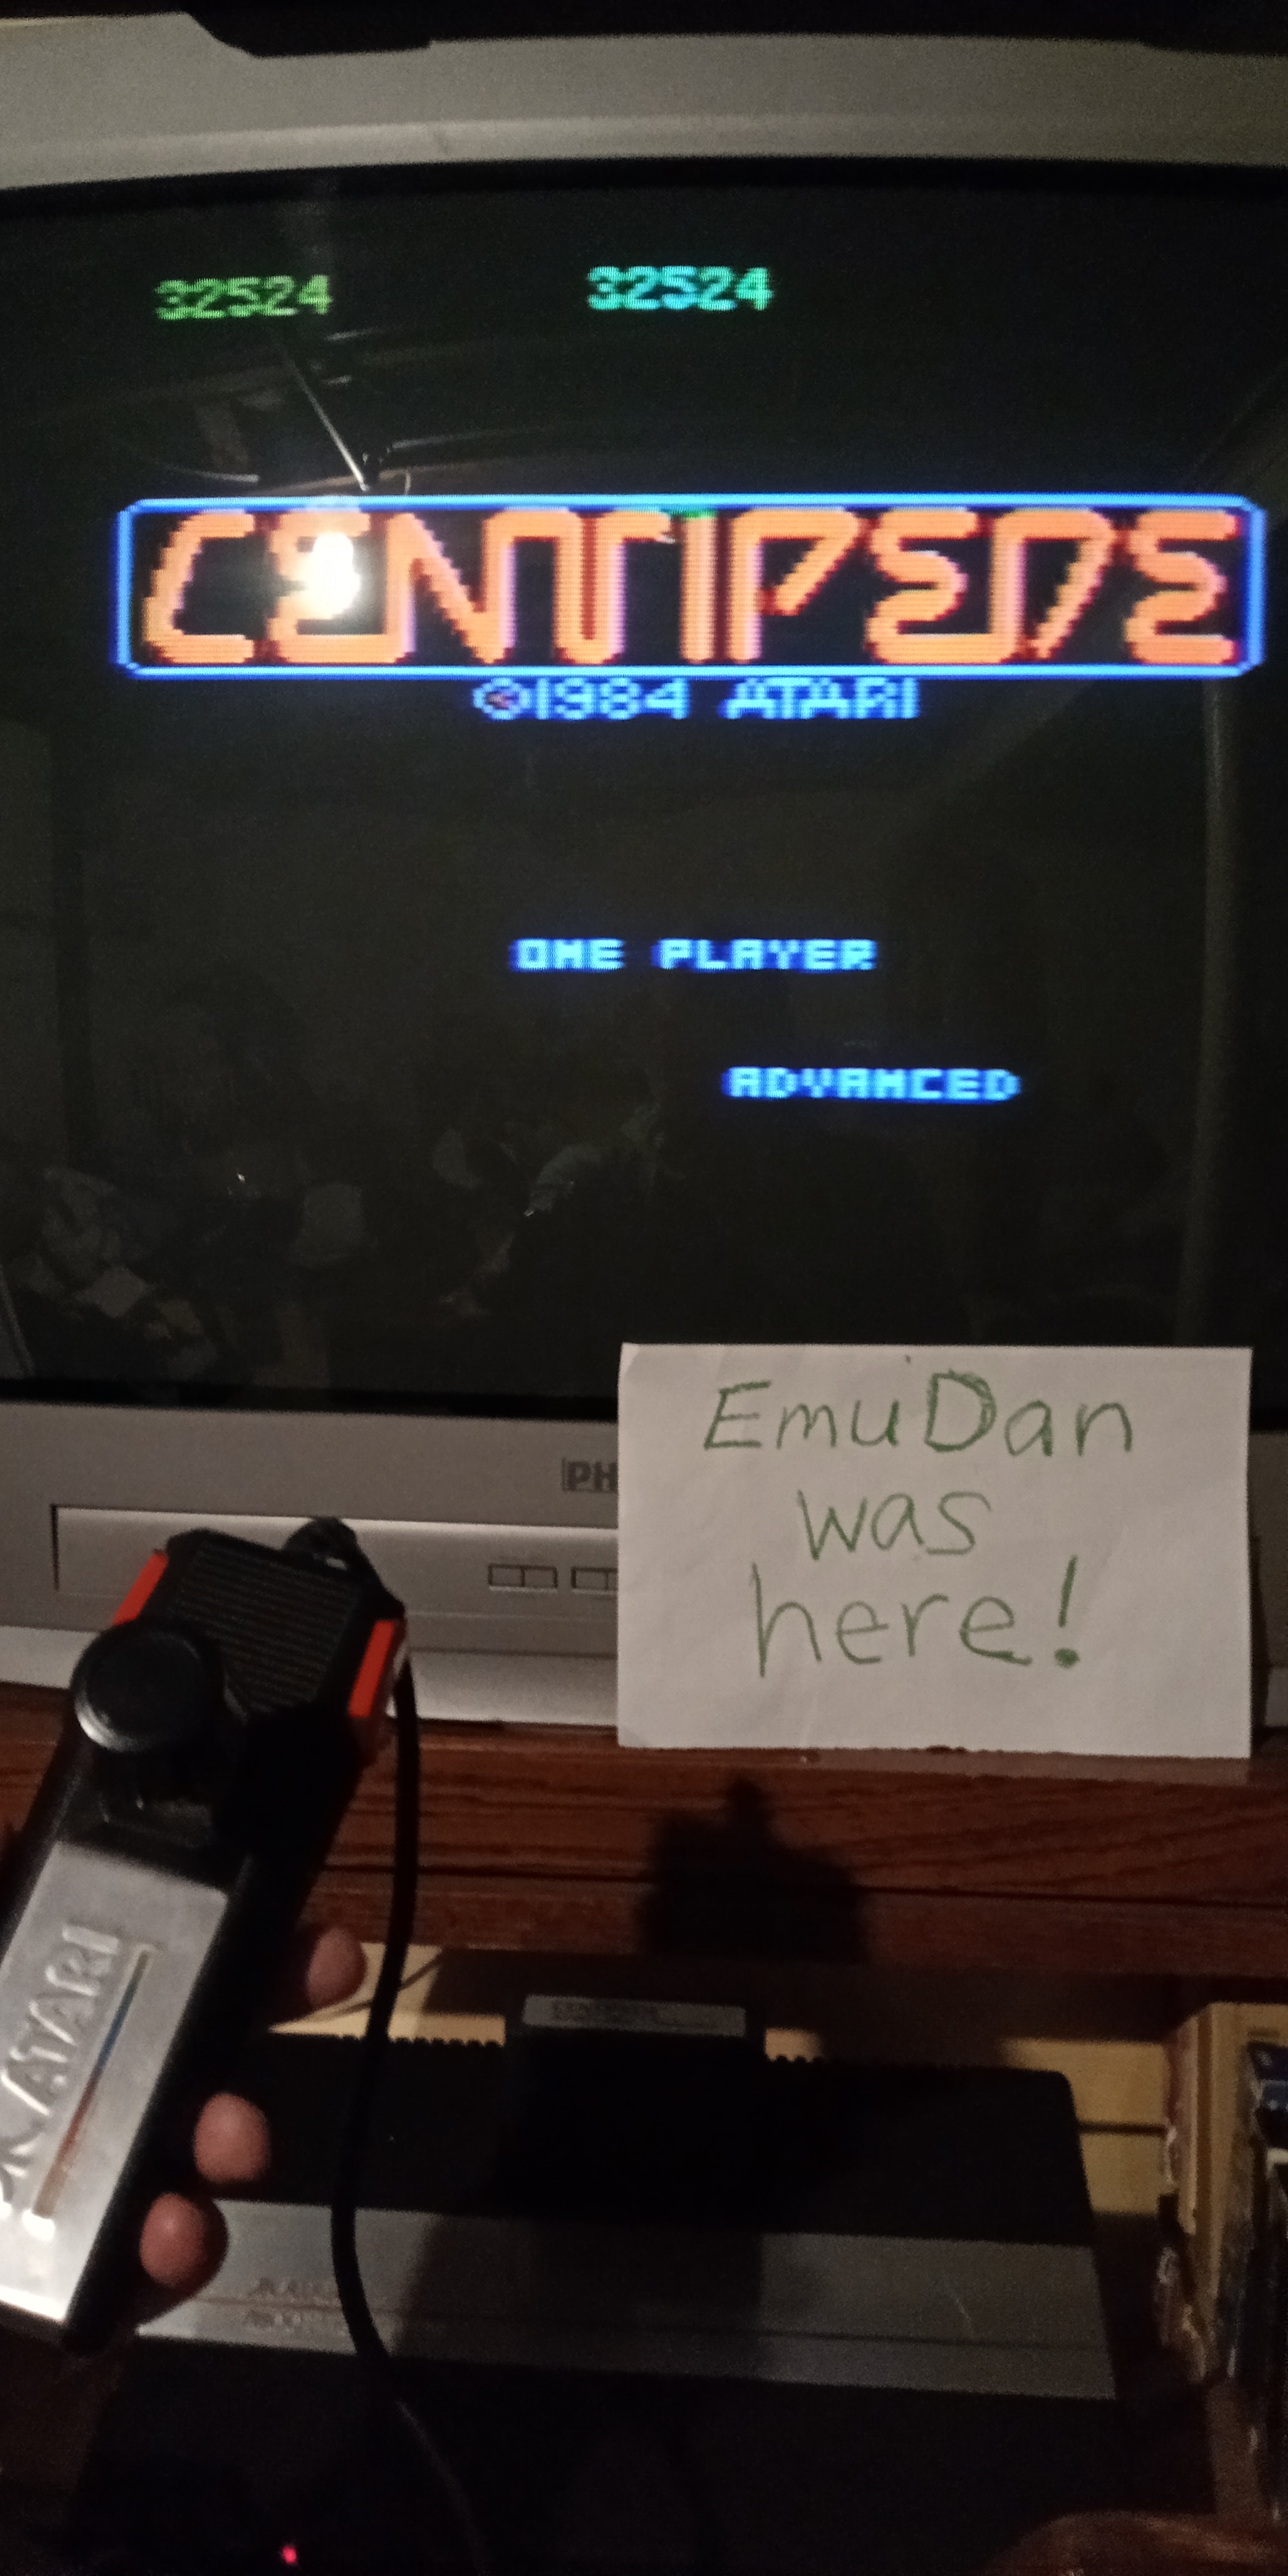 EmuDan: Centipede: Advanced (Atari 7800) 32,524 points on 2020-04-28 19:44:54